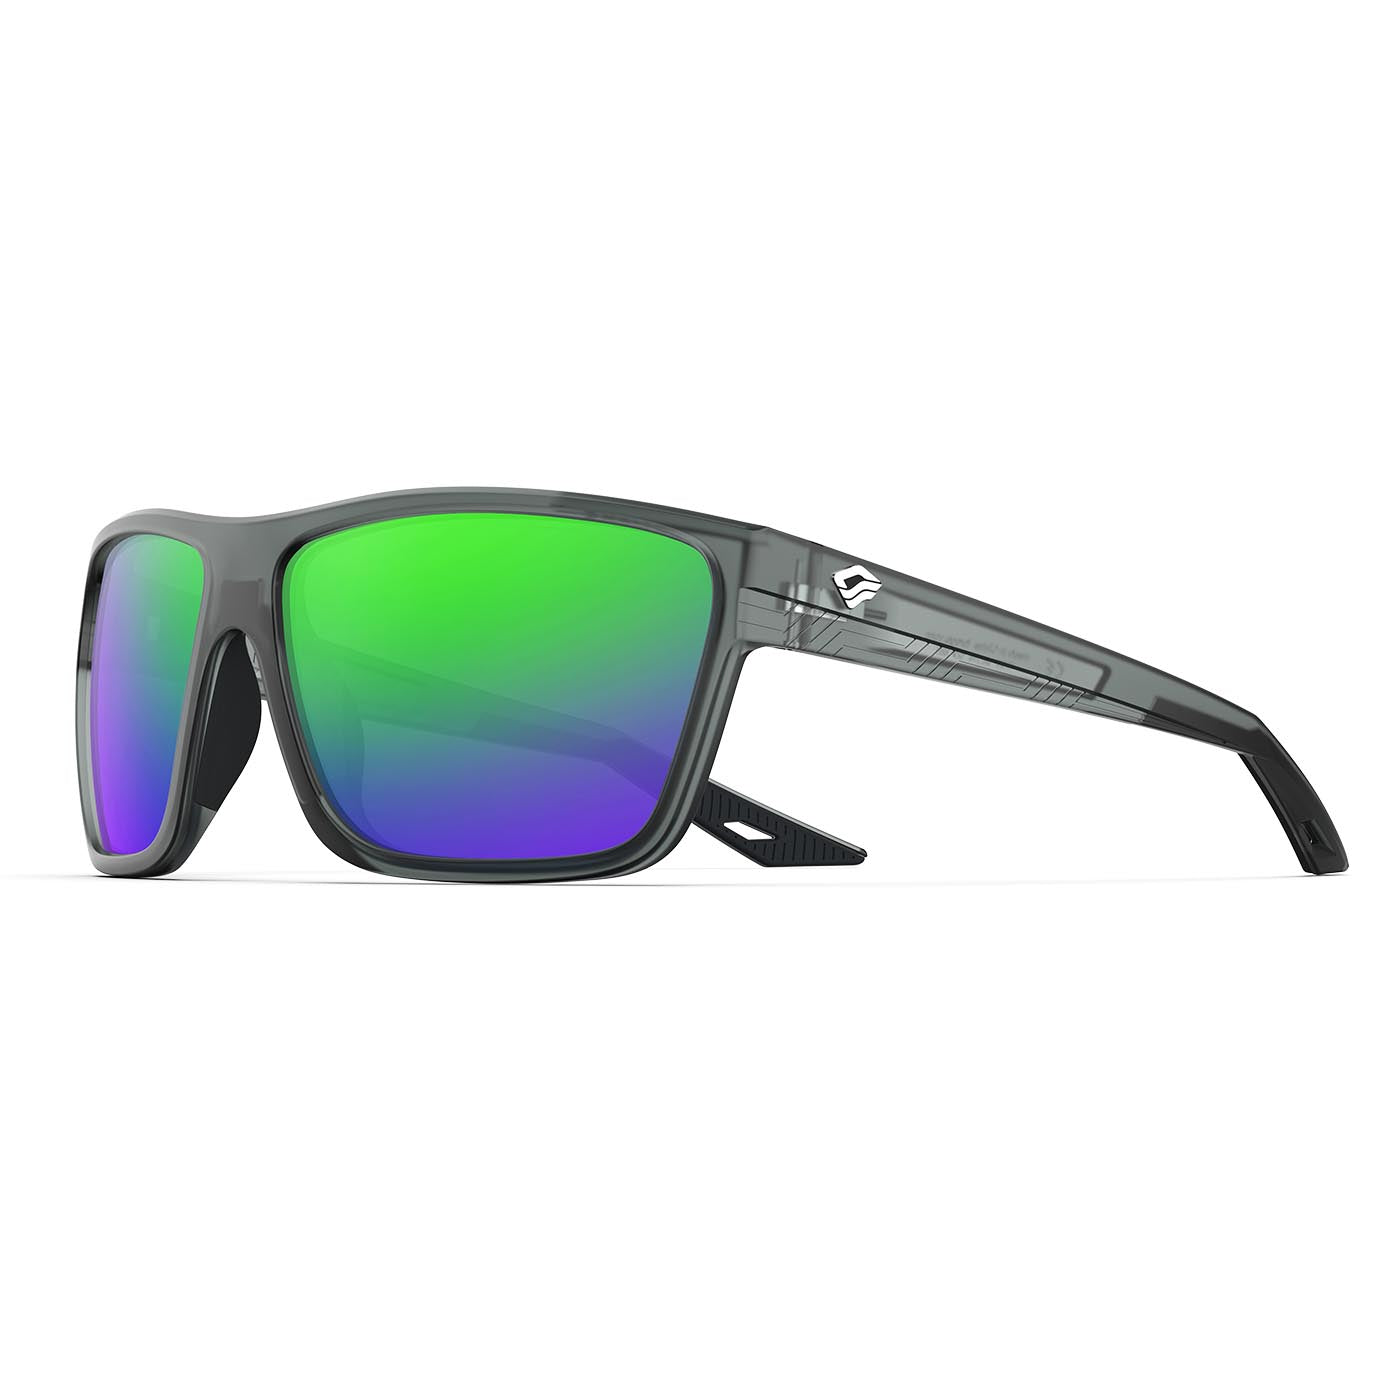 Torege 'ICEBREAKER' Sports Polarized Sunglasses for Men and Women - Lifetime Warranty - Men & Women Glasses for Golf, Fishing, and More